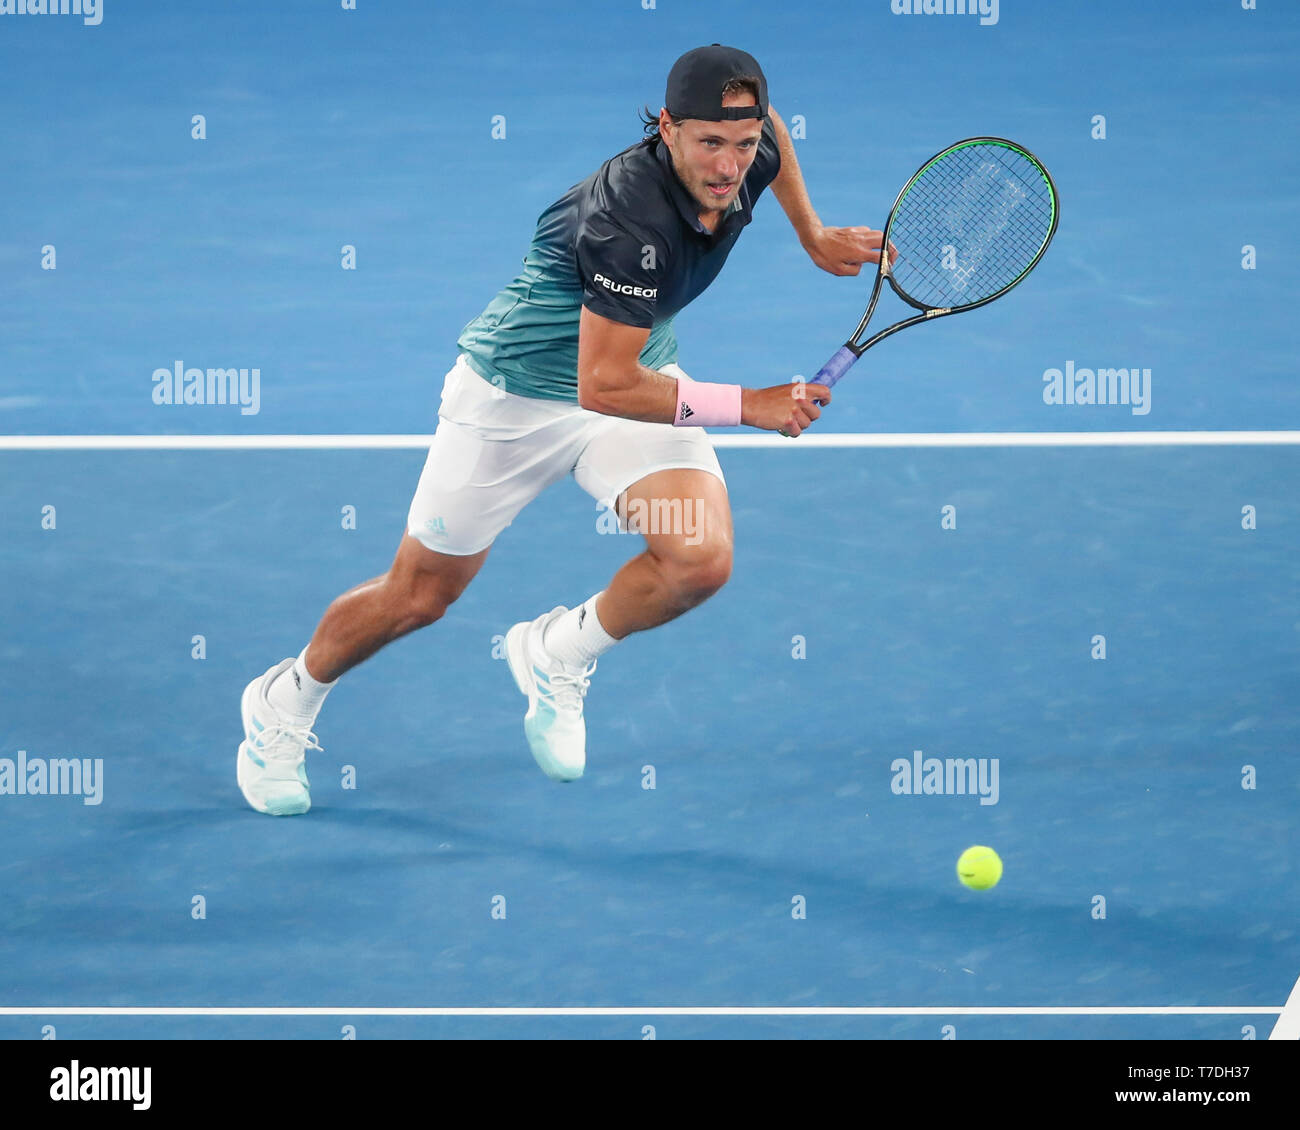 French tennis player Lucas Pouille running forward during Australian Open  2019 tennis tournament, Melbourne Park, Melbourne, Victoria, Australia  Stock Photo - Alamy